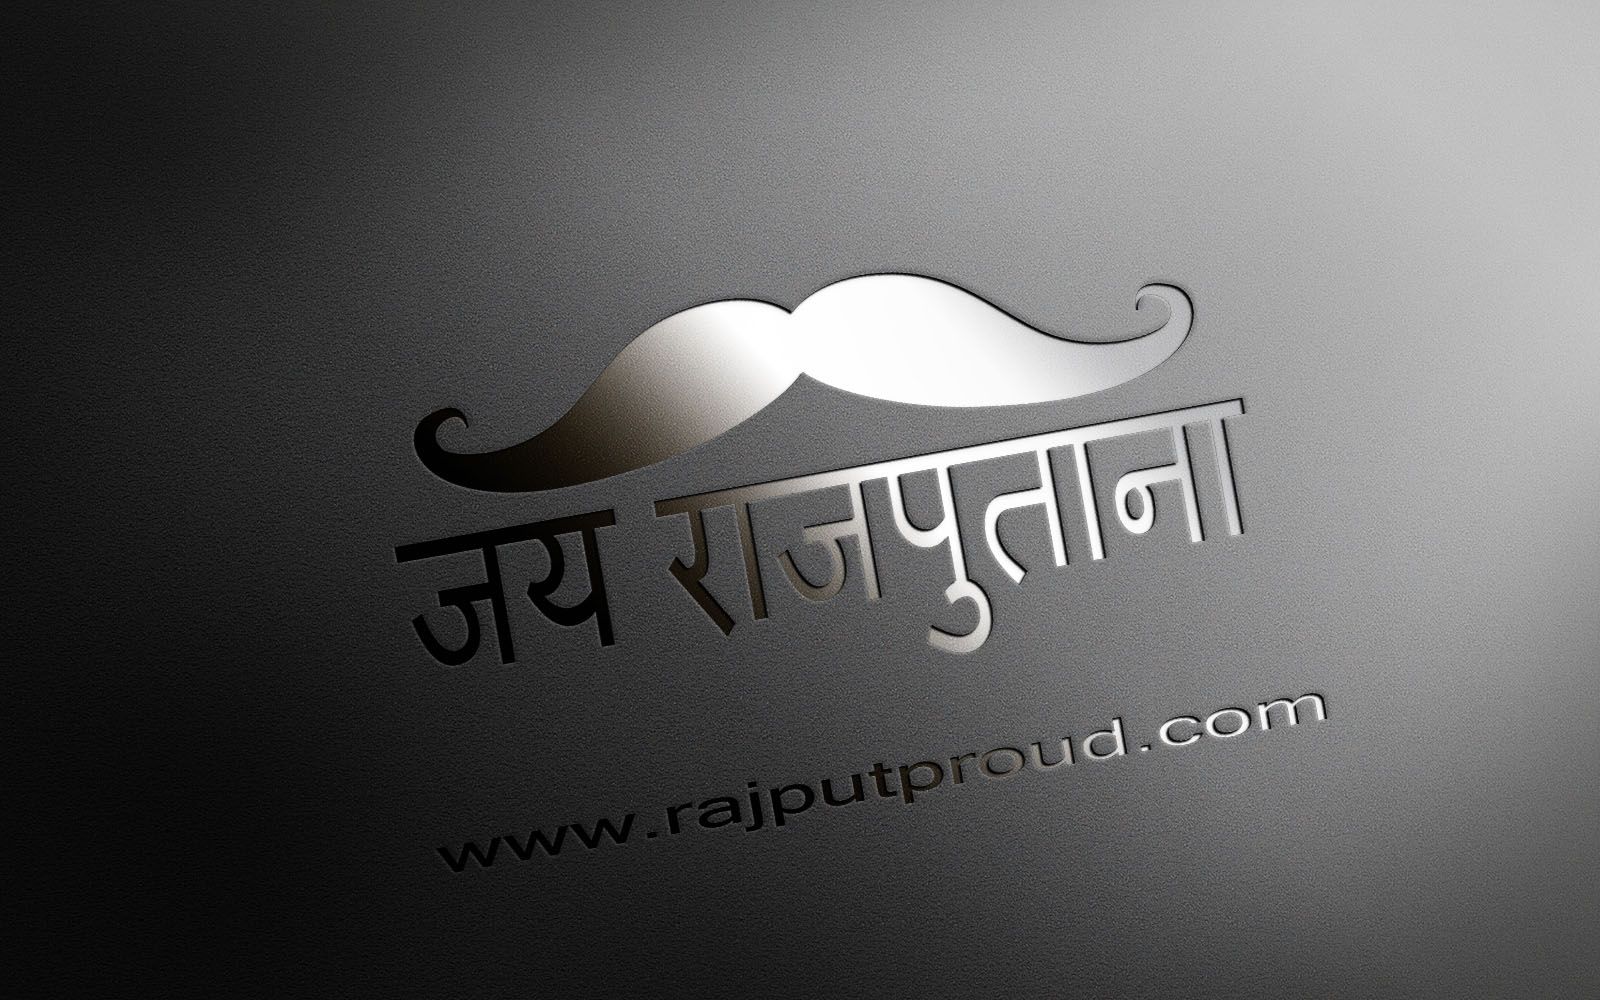 16+] Rajputana HD Wallpapers - WallpaperSafari